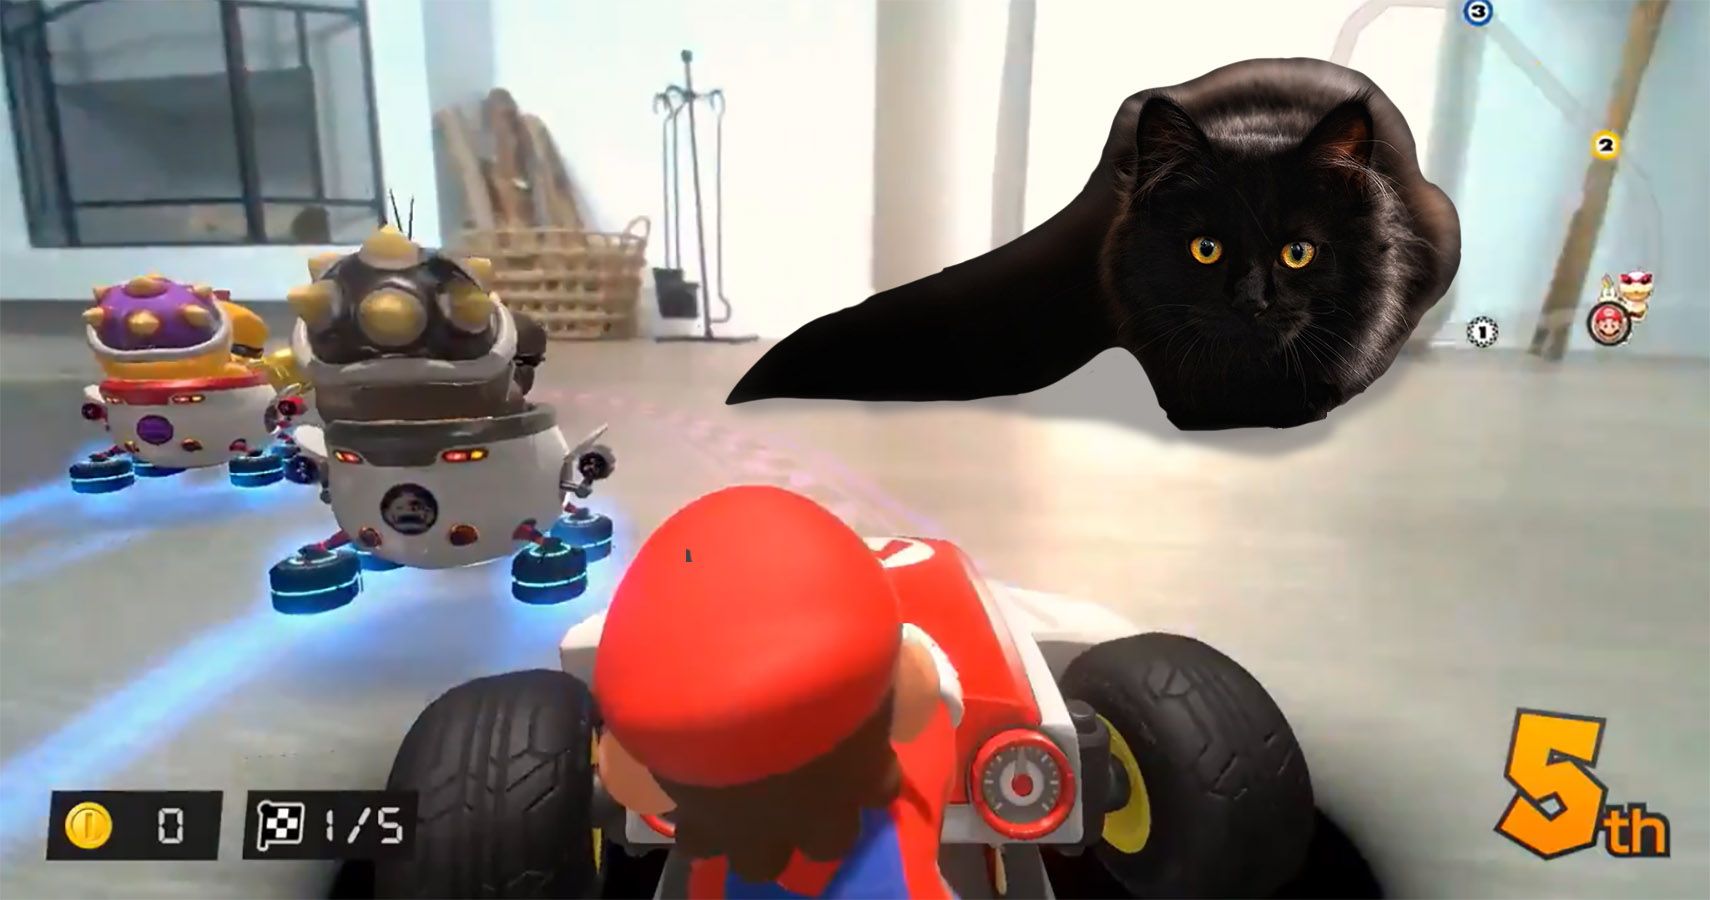 Mario Kart preview from Nintendo.